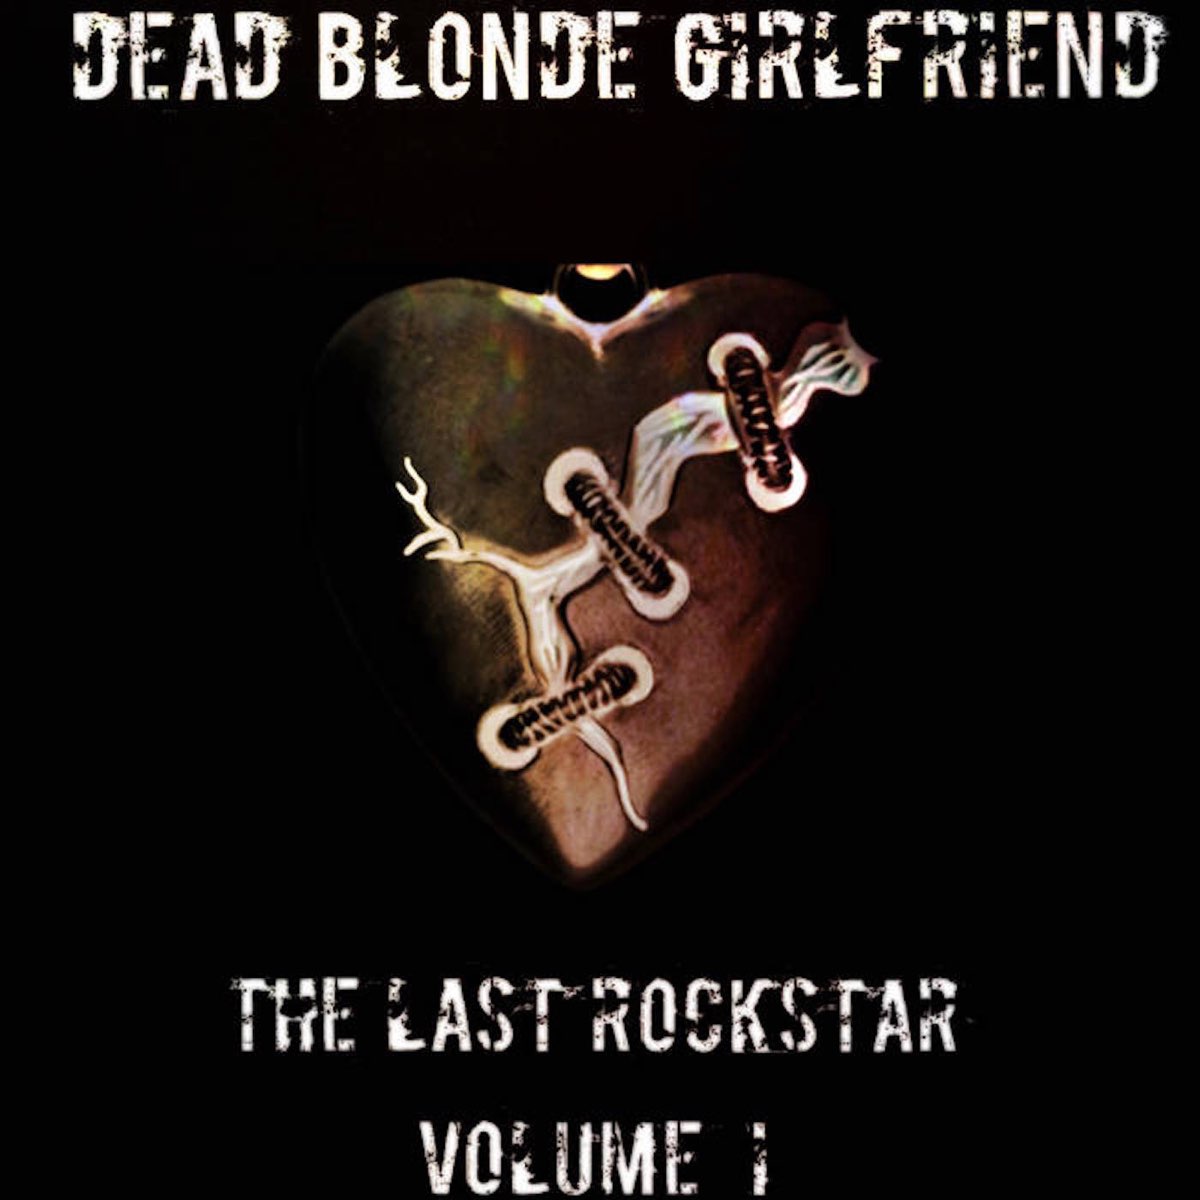 Dead blonde слушать песни. Dead blonde. Dead blonde песни. Dead blonde обложка альбома. Dead blonde лейбл.